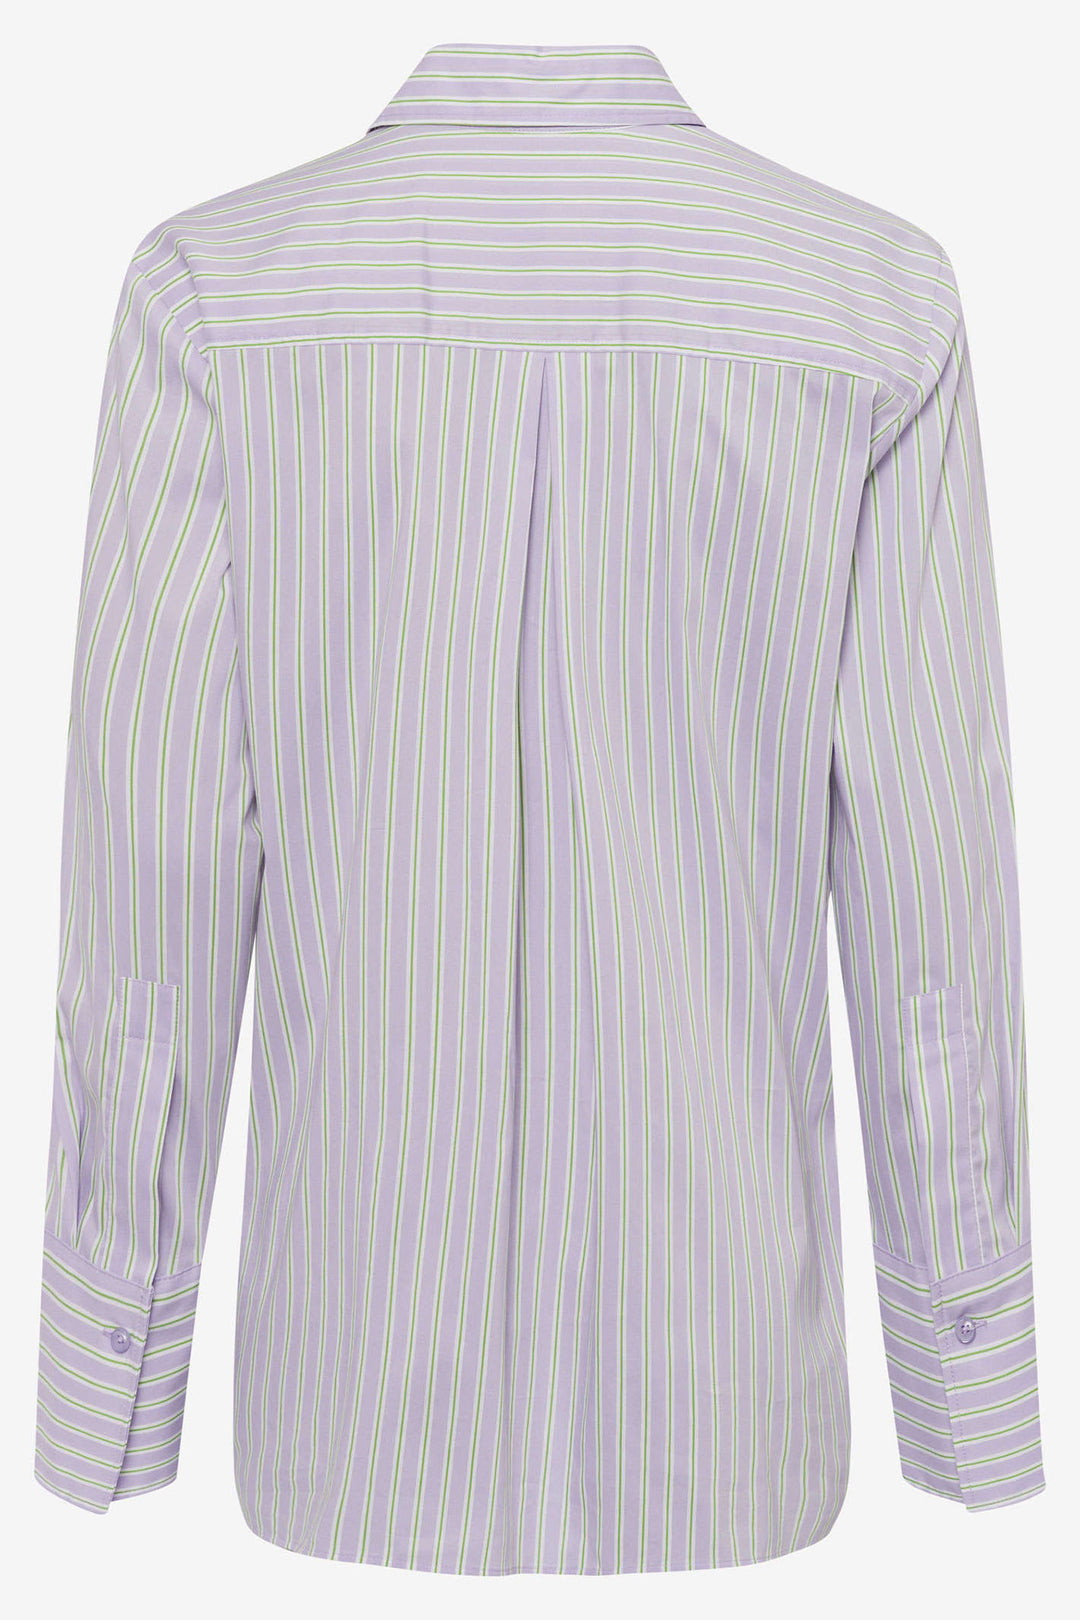 Brax Vicki 44-2582 94112400 84 Soft Purple Striped Shirt - Shirley Allum Boutique